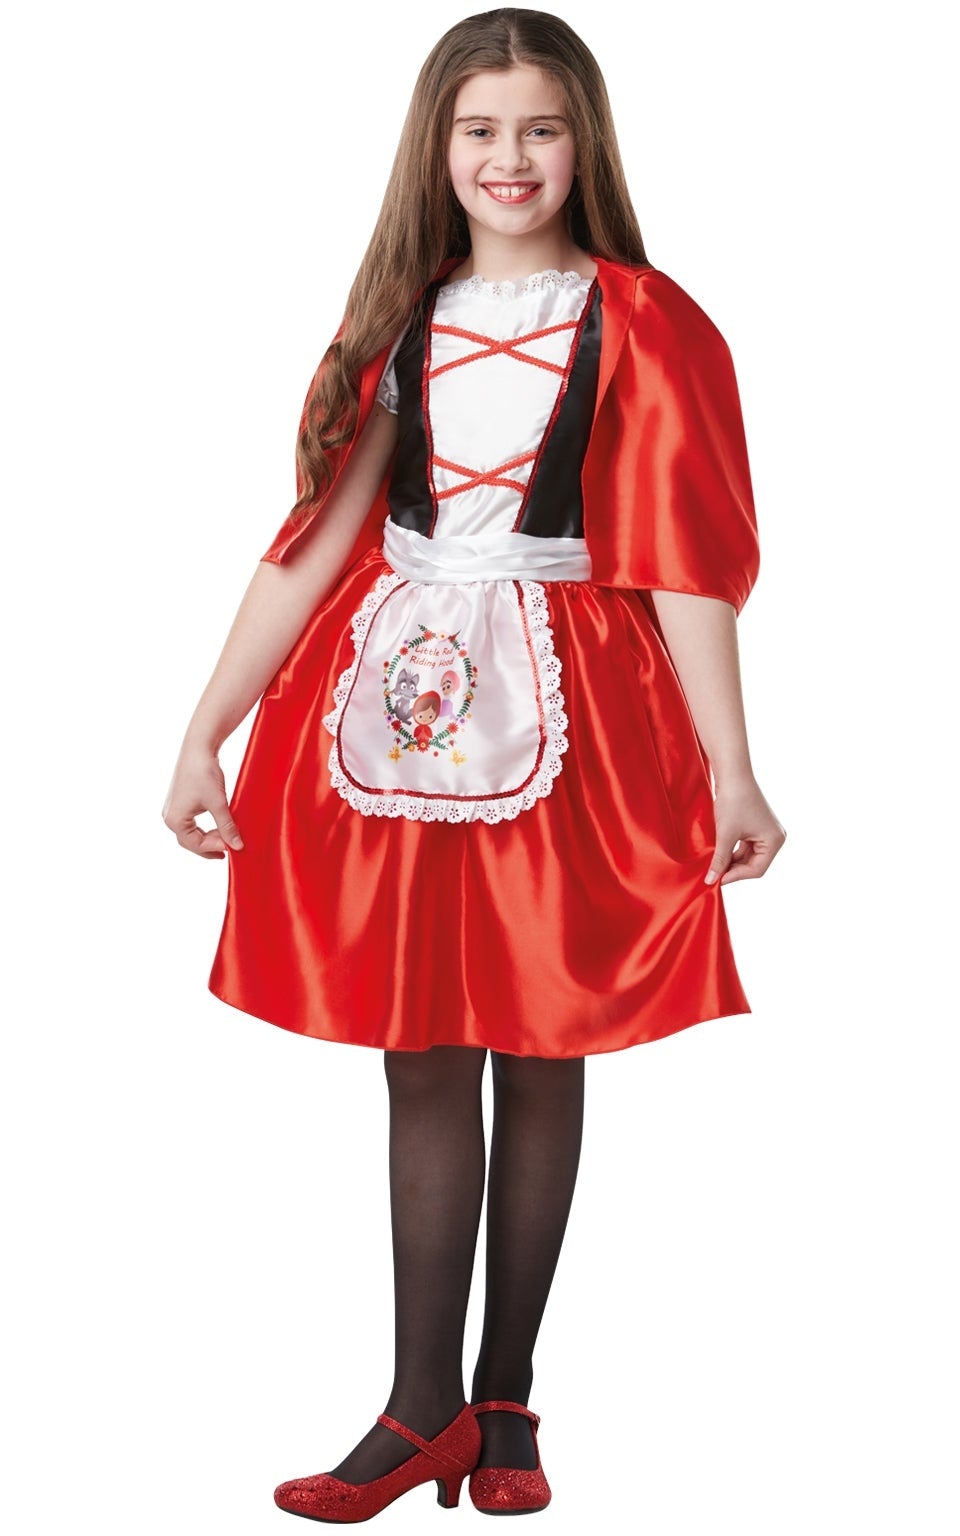 Red Riding Hood Girls Costume_4